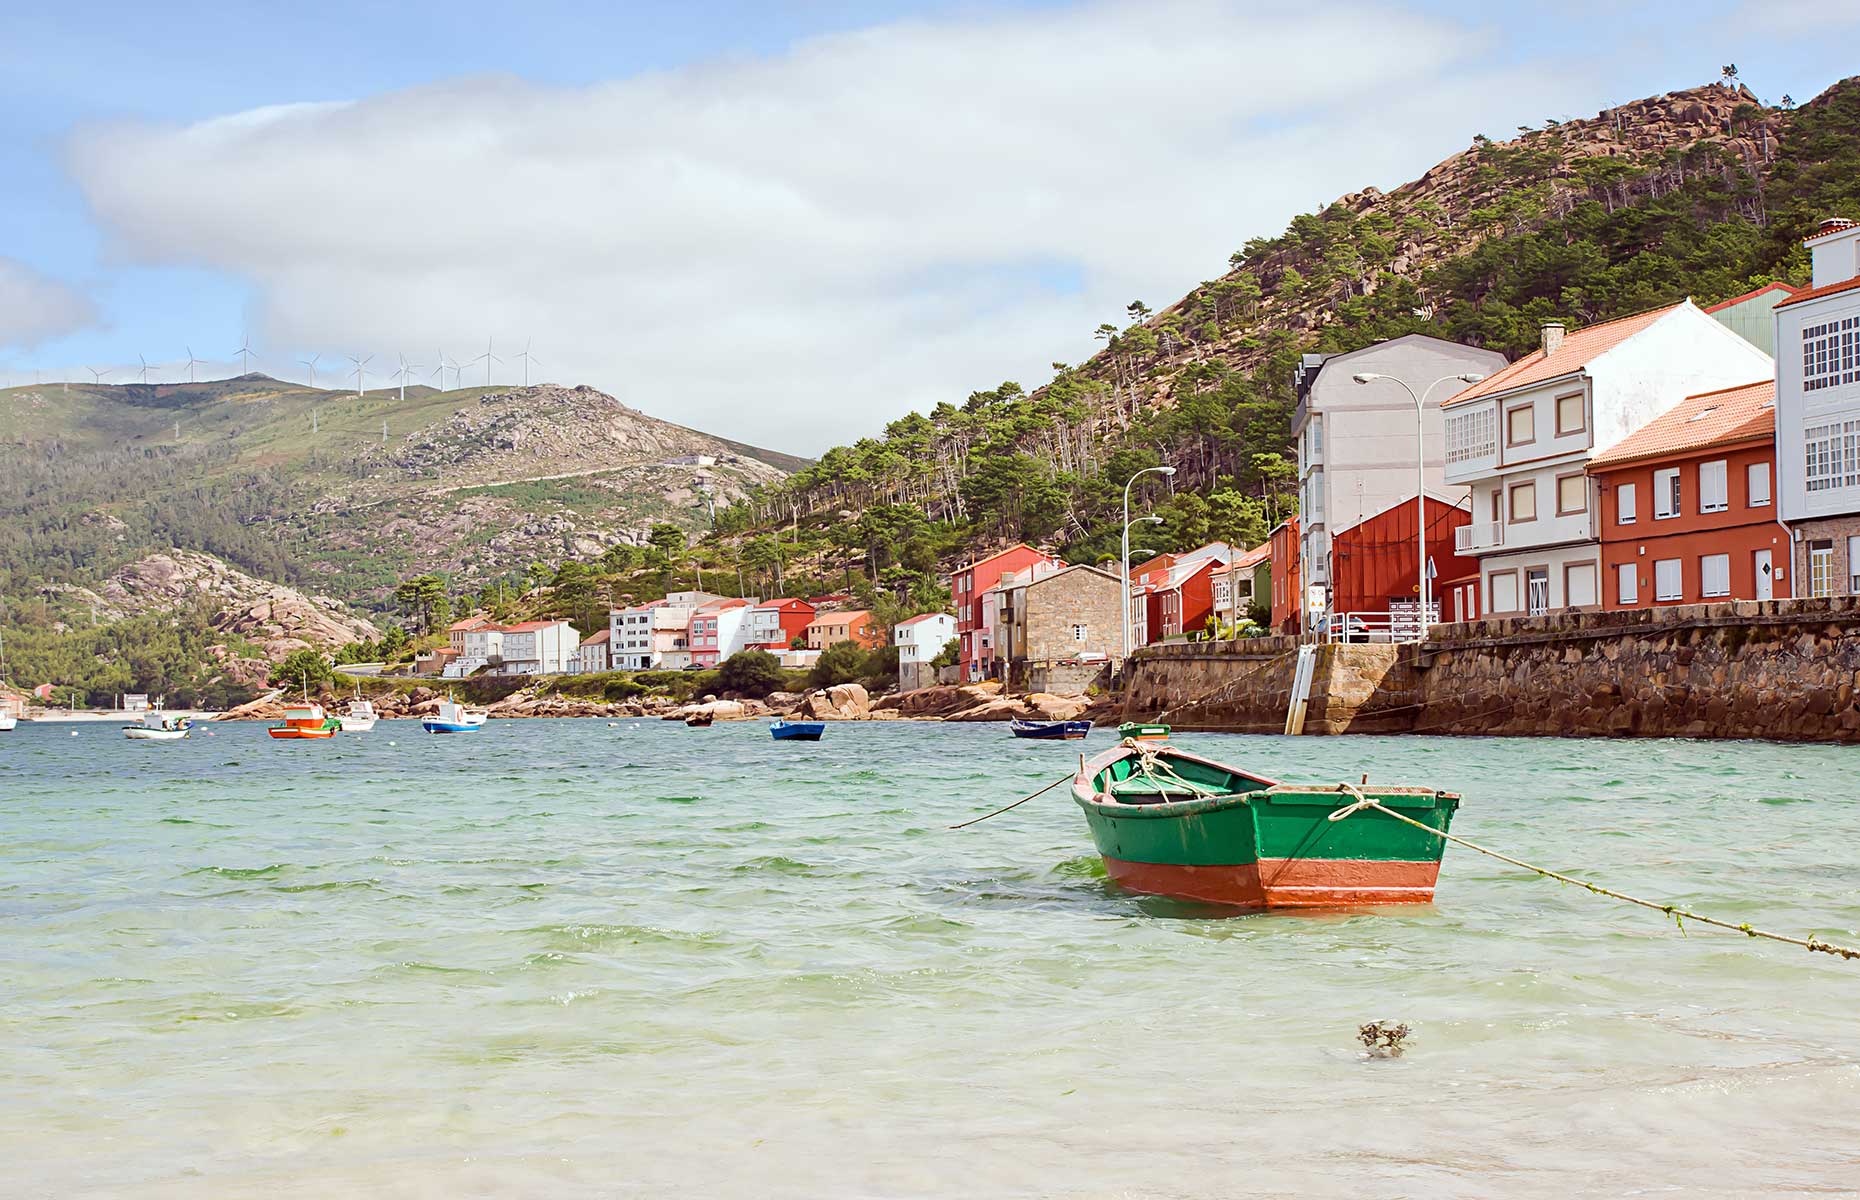 Fishing village in the Rías Baixas (Image: Pabkov/Shutterstock)